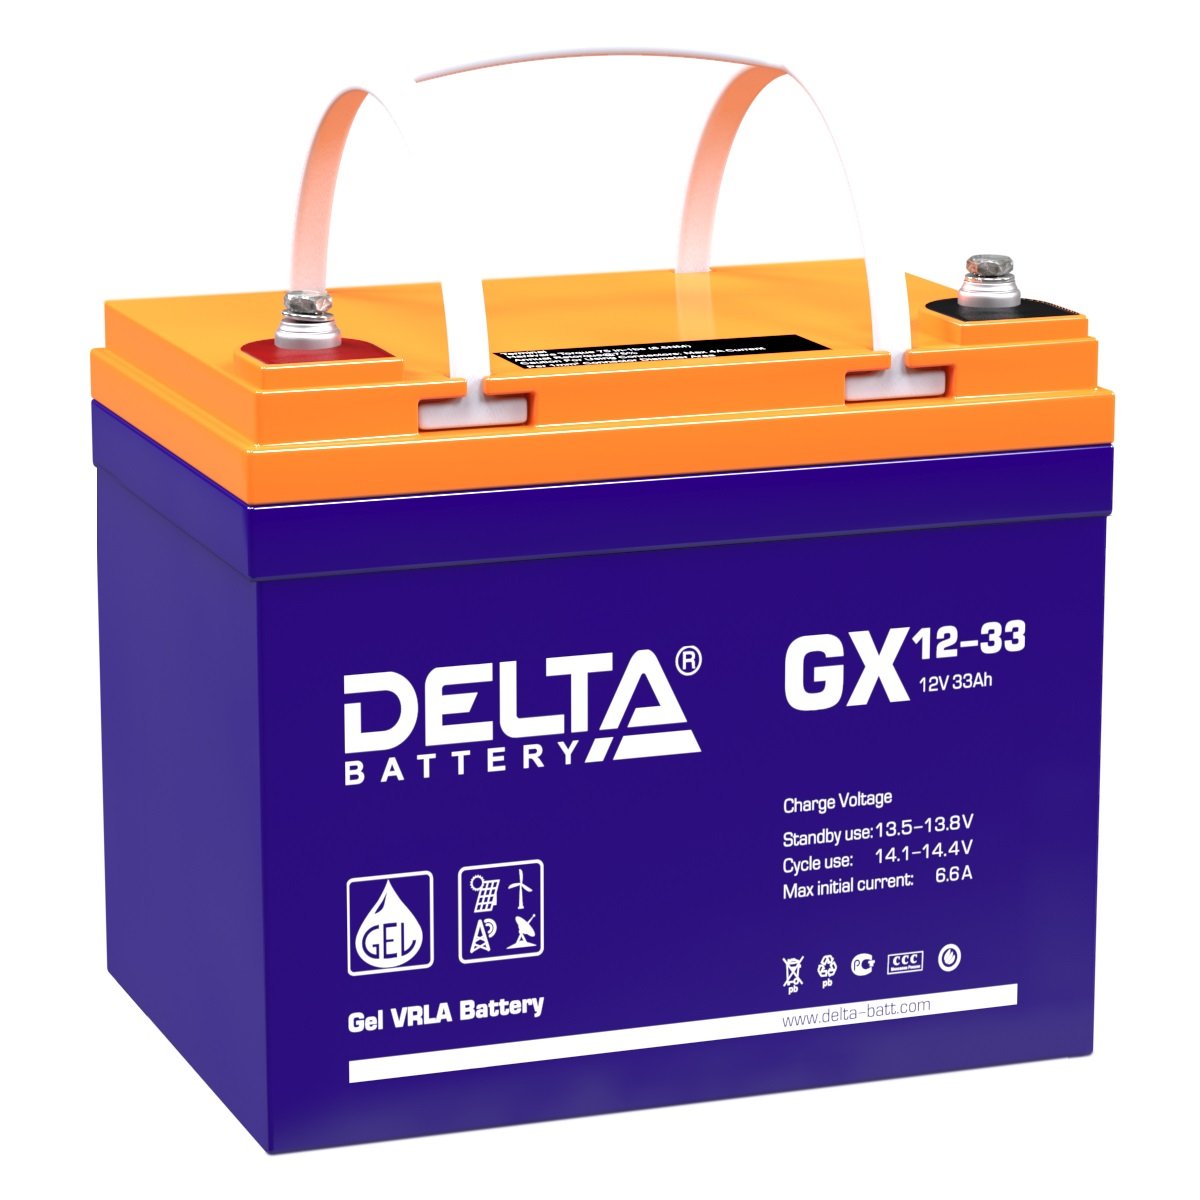 Delta GX 12-33: Аккумулятор герметичный свинцово-кислотный